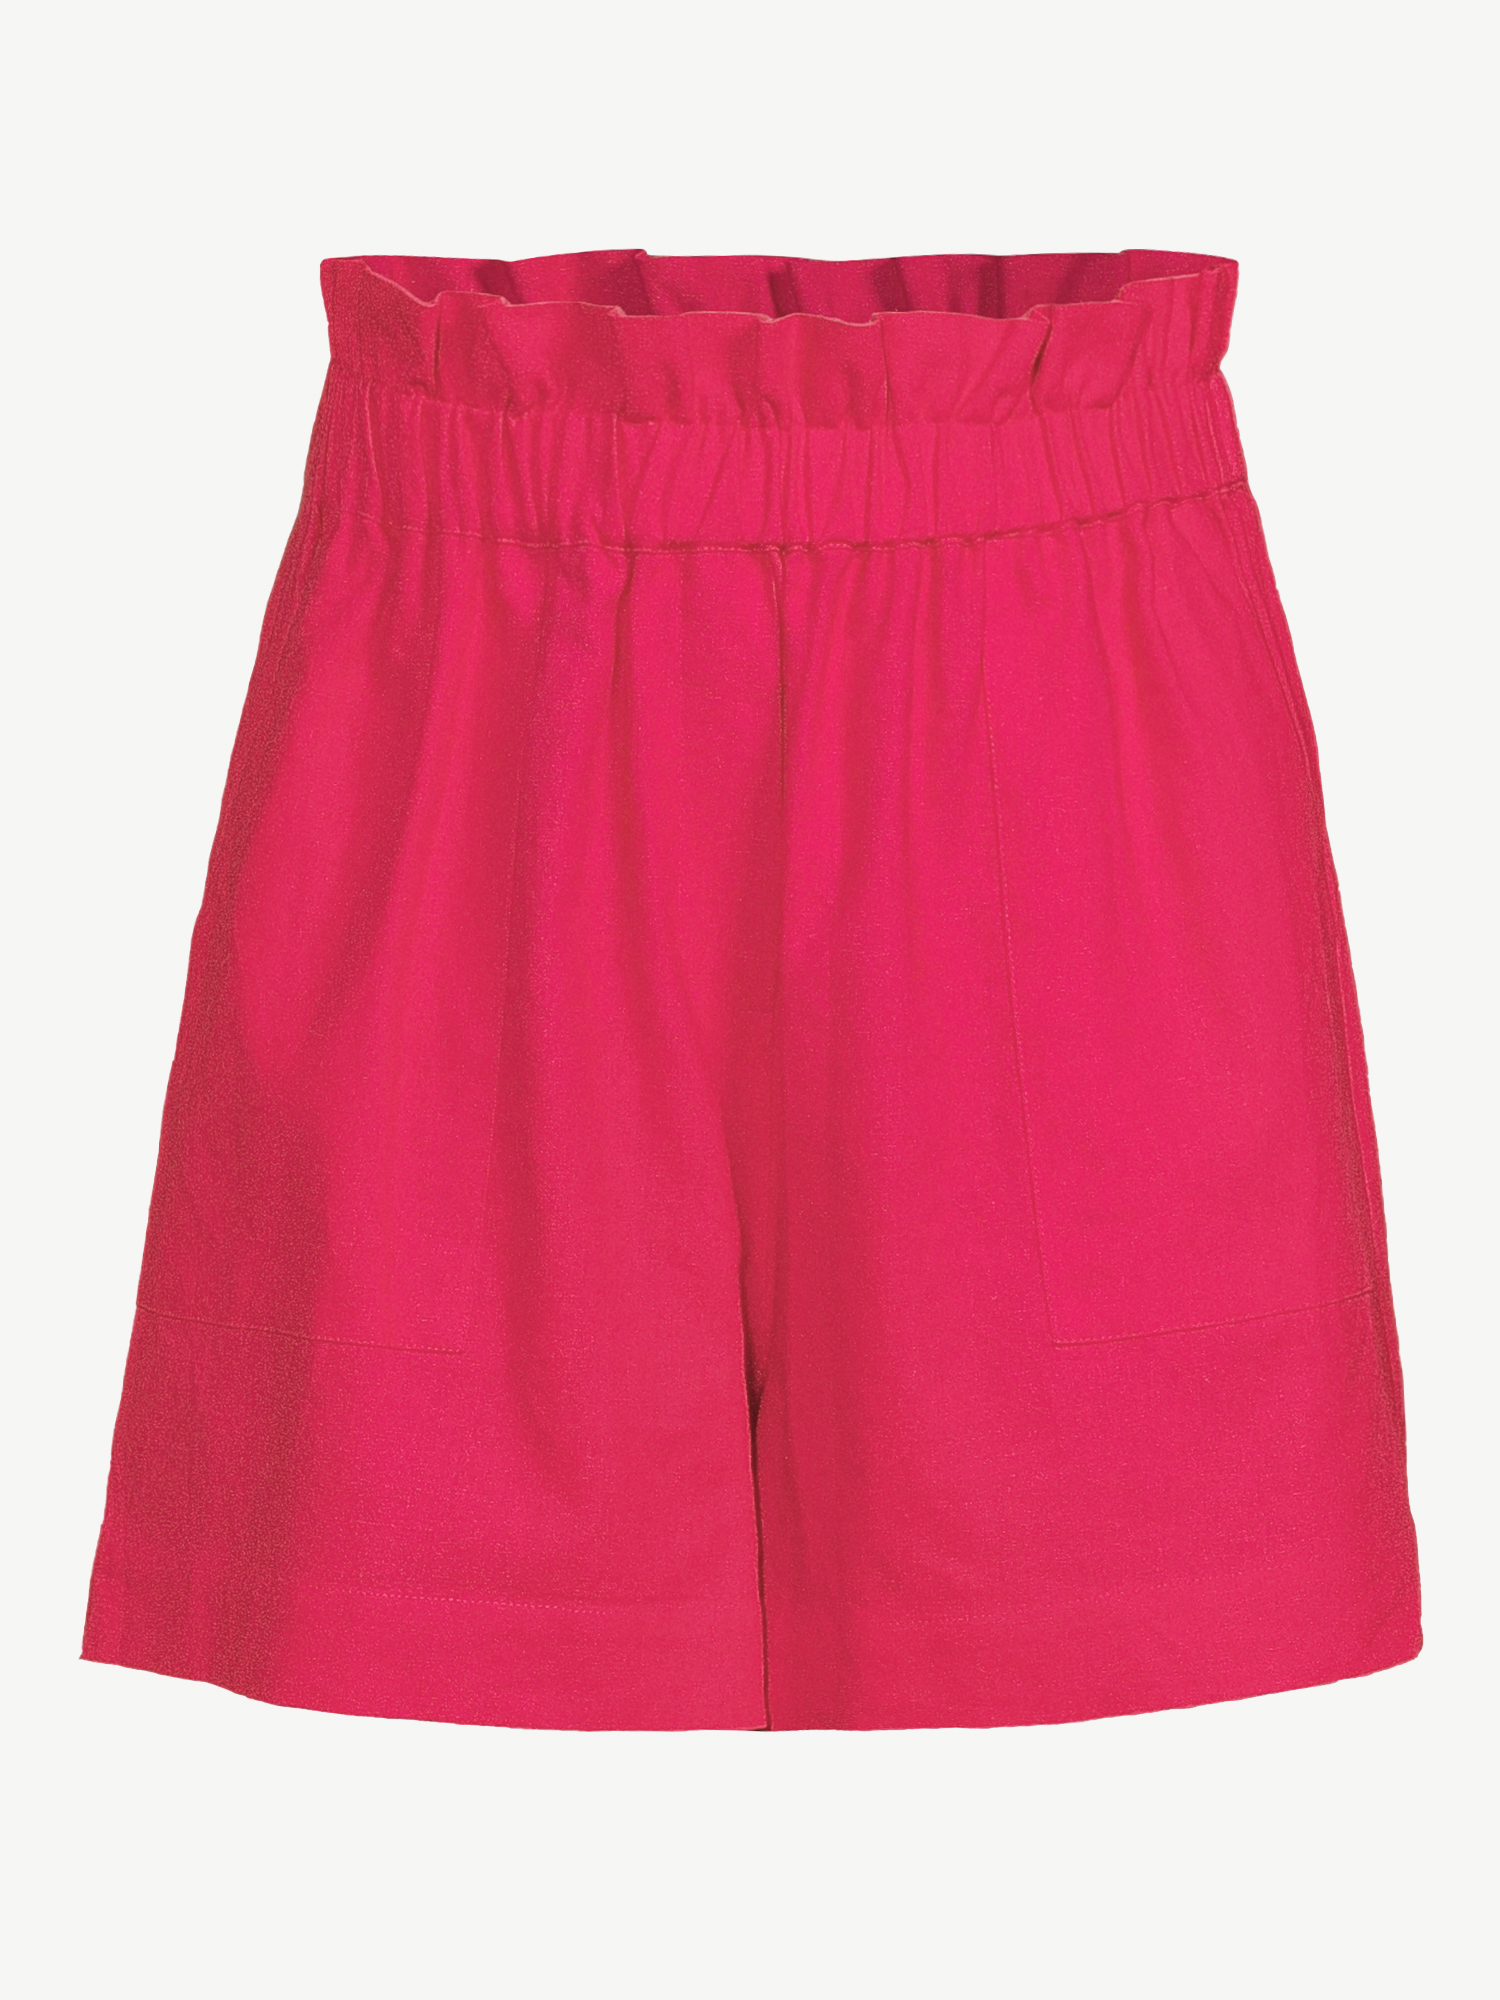 Scoop Women's Paperbag Shorts - image 5 of 5